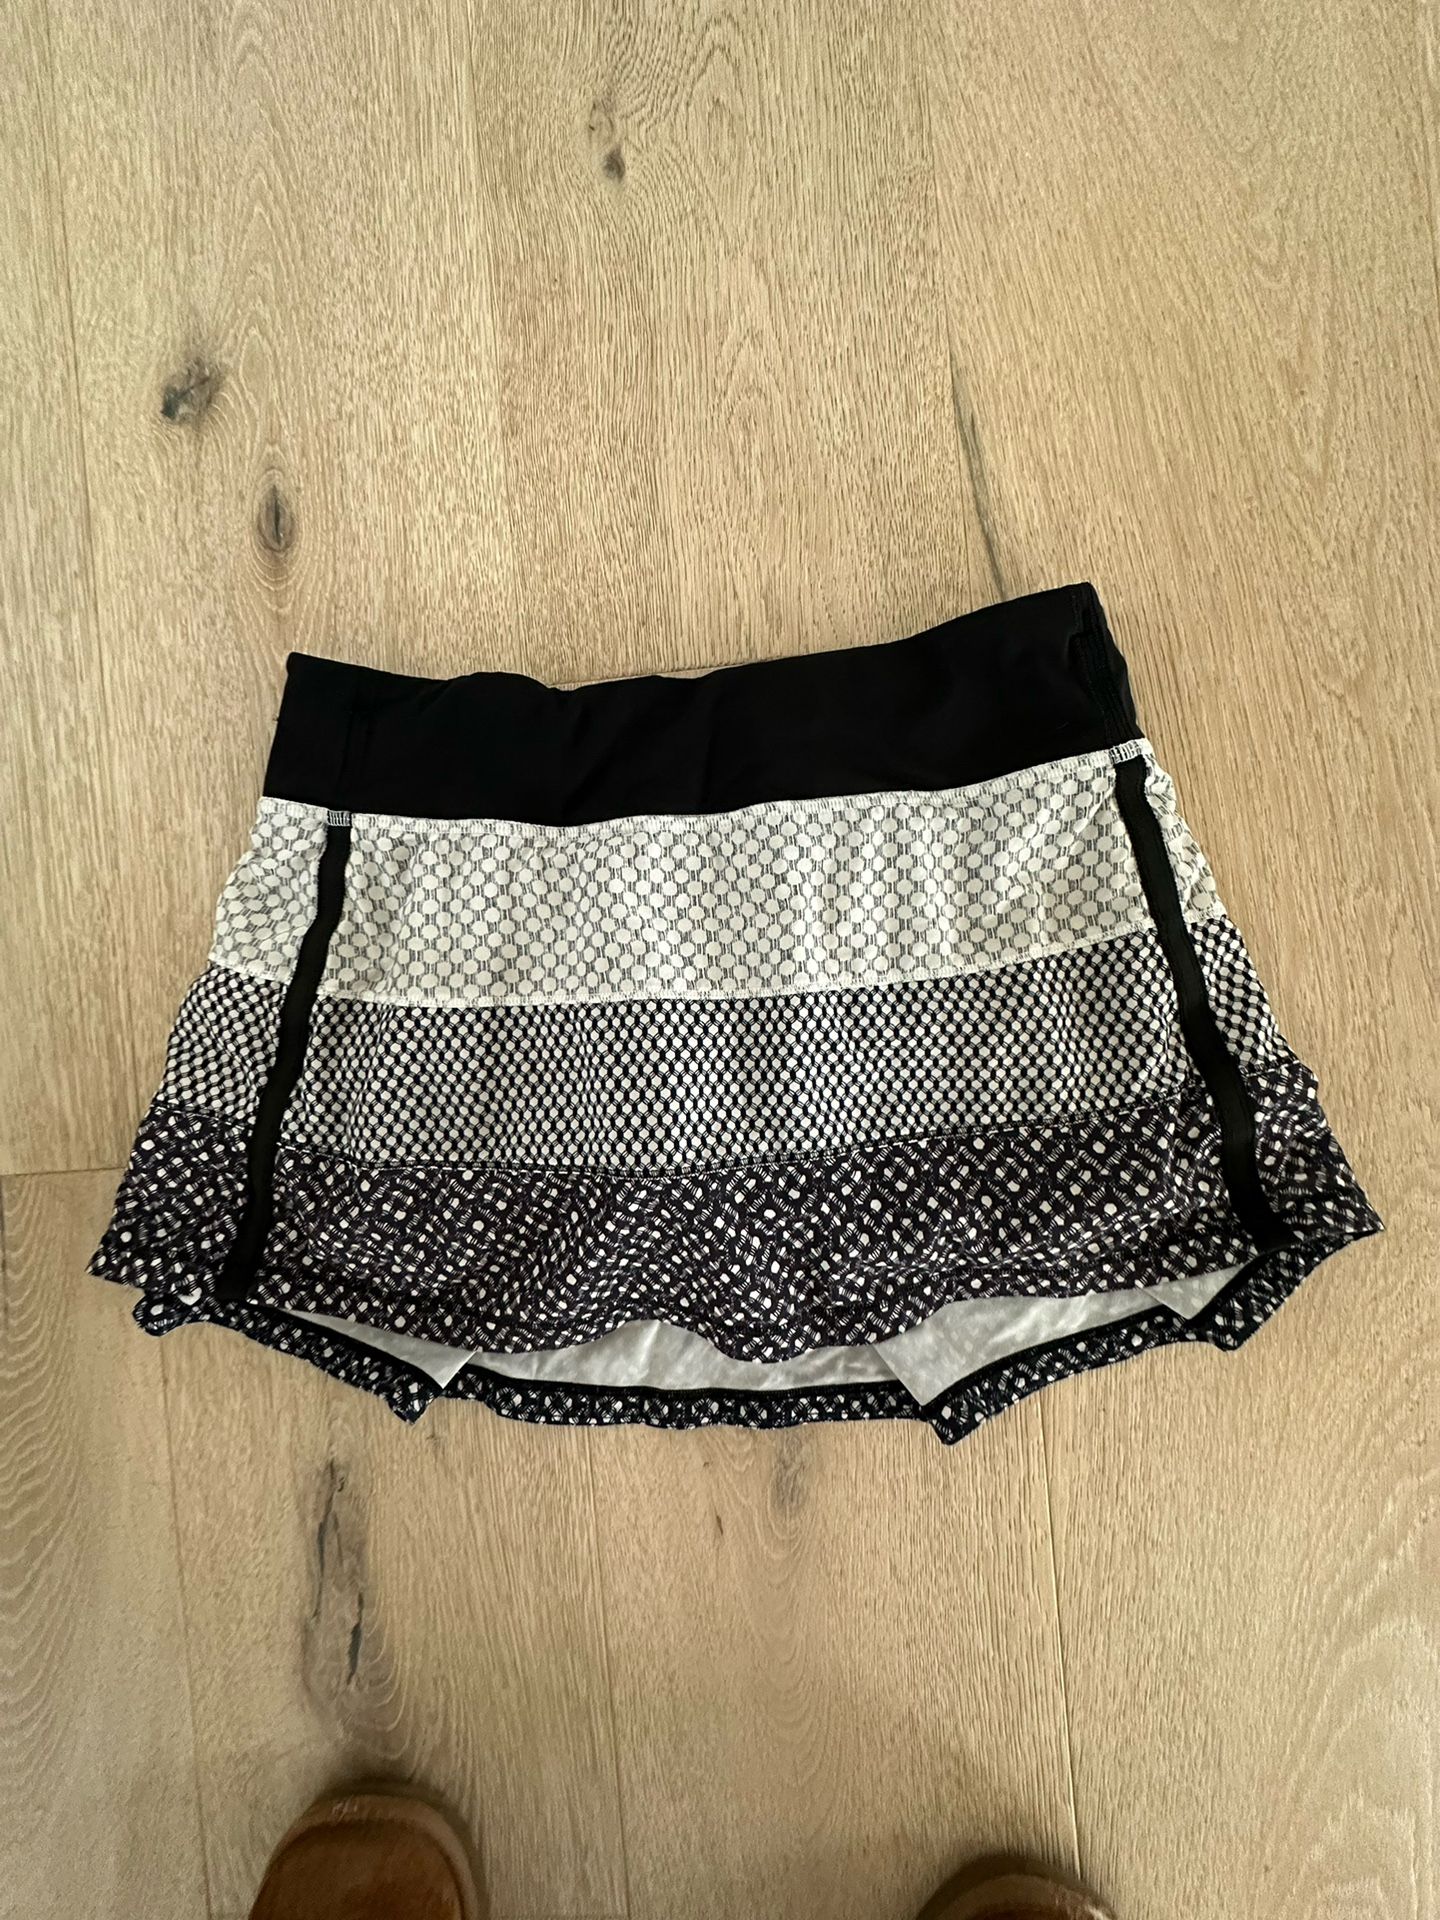 Lululemon Tennis Skirt Size 6